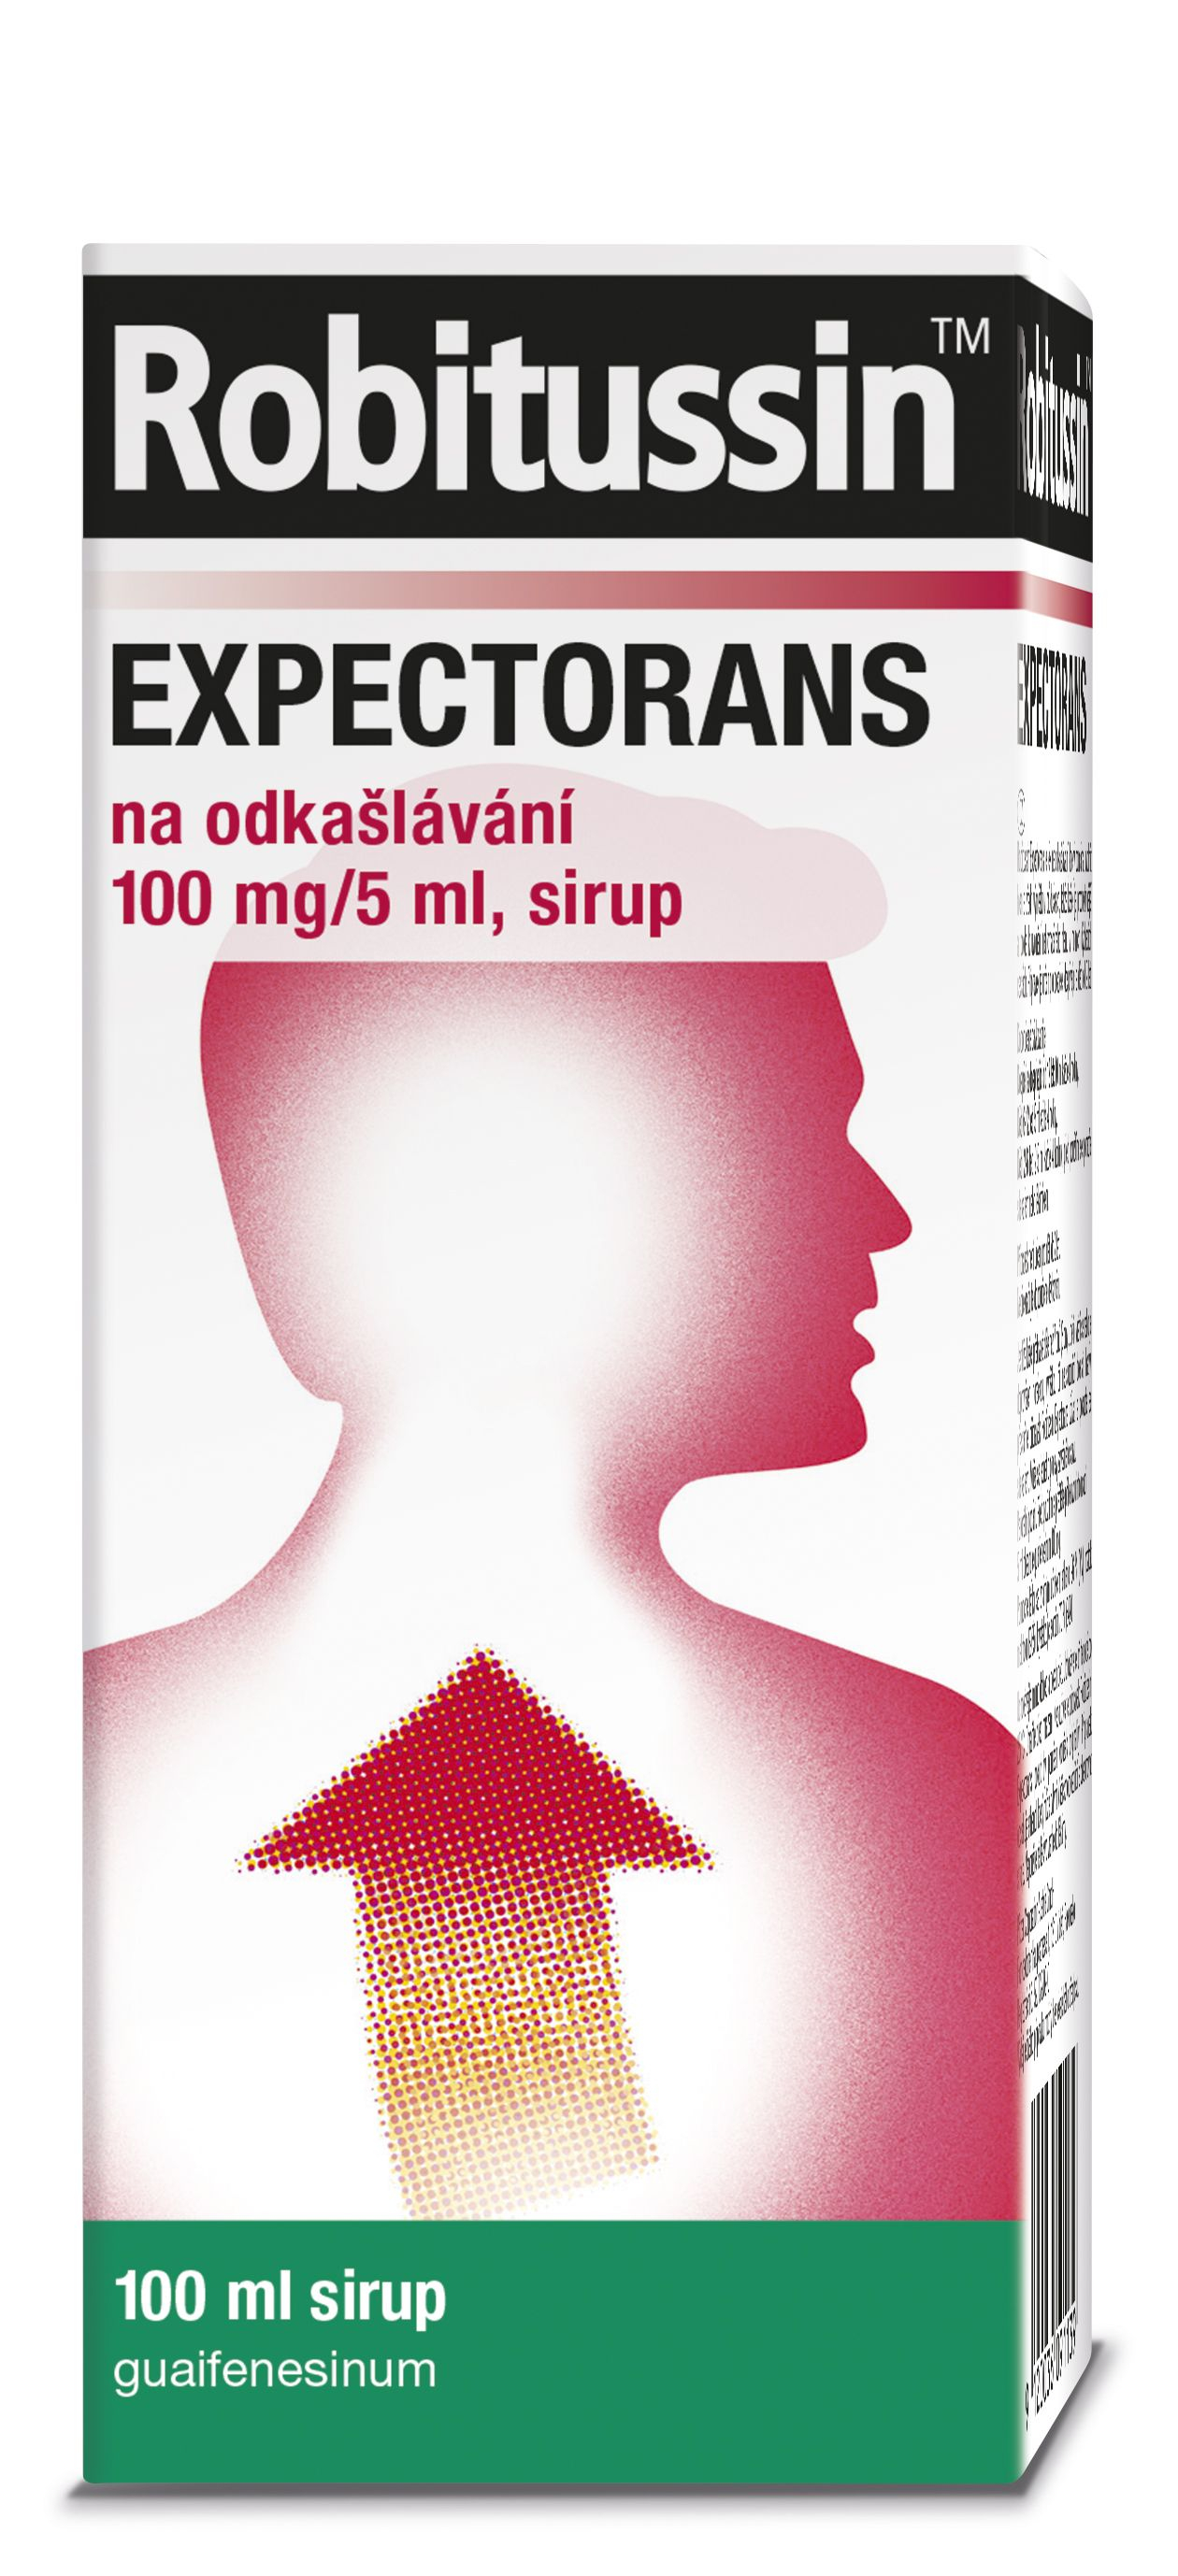 Robitussin Expectorans na odkašlávání 100 mg/5 ml sirup 100 ml Robitussin